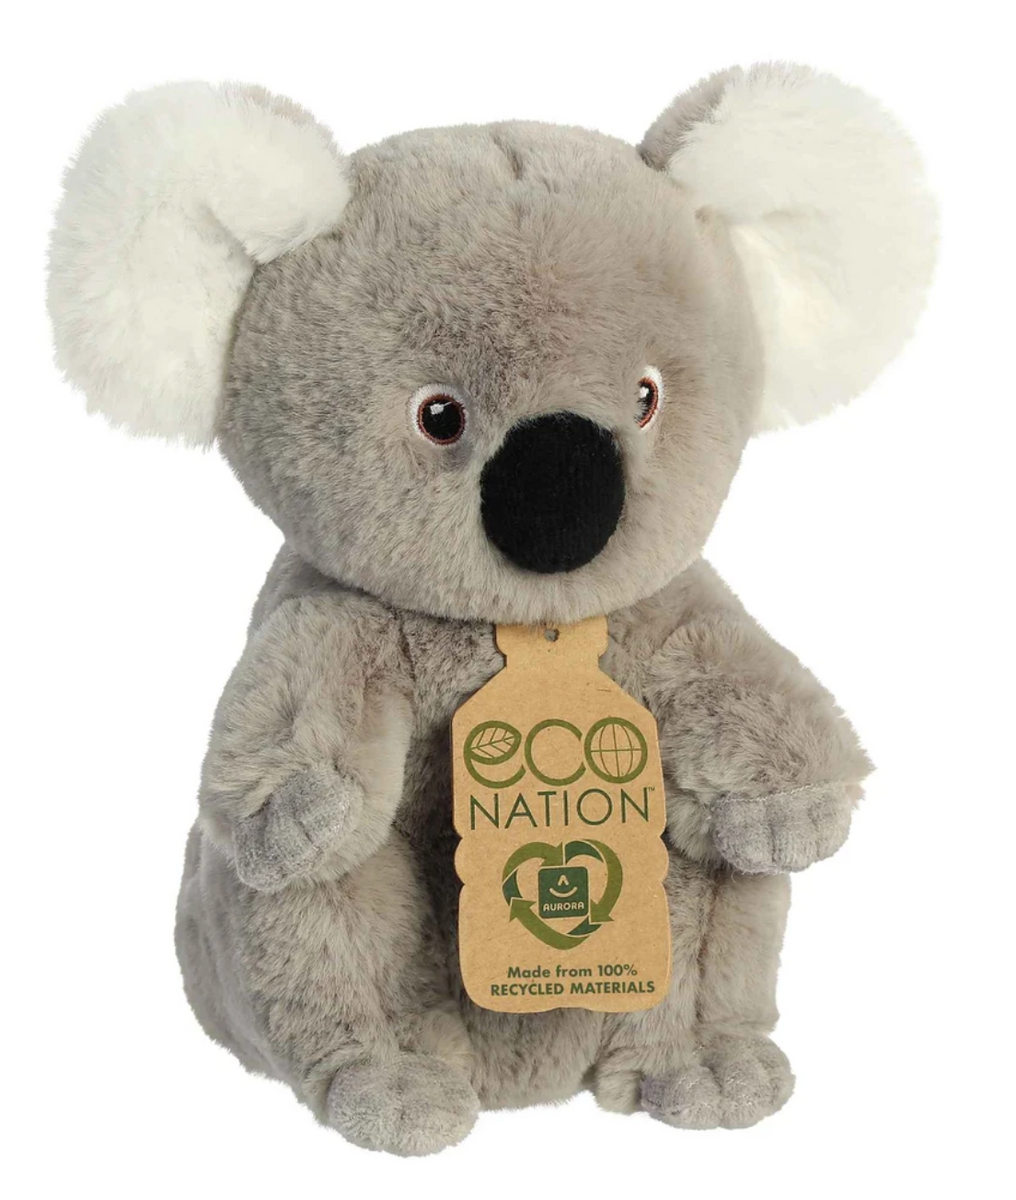 Peluche Koala 38 cm - Juguettos